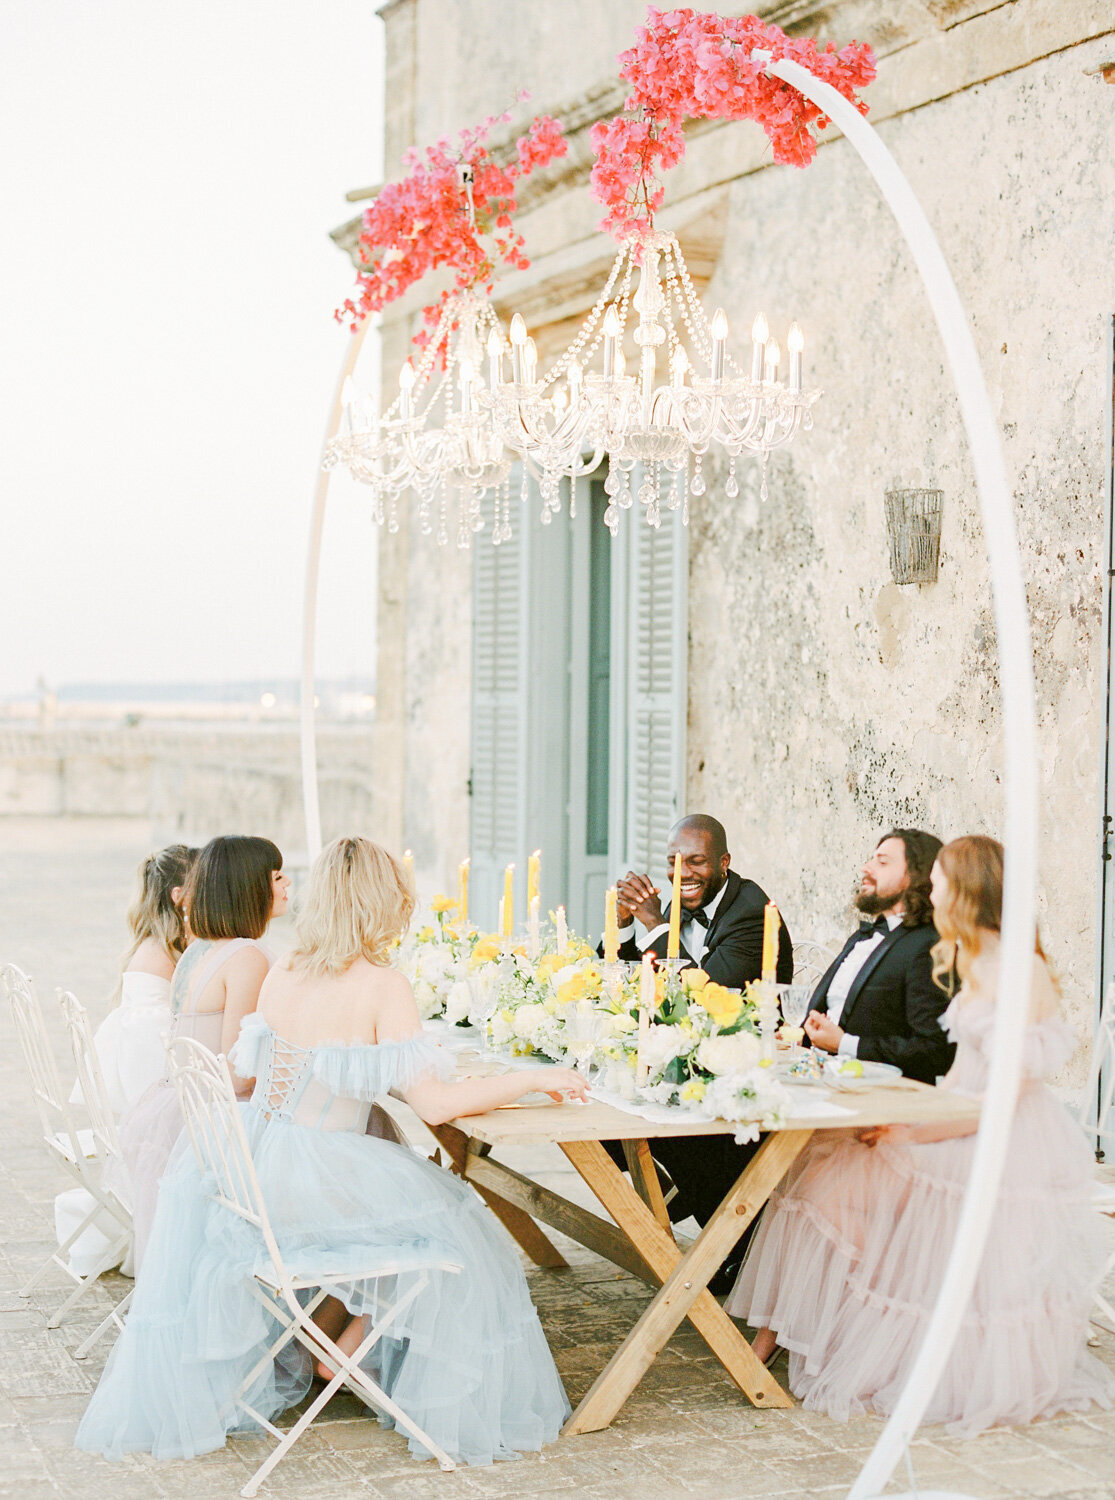 Wedding dinner in Sicily